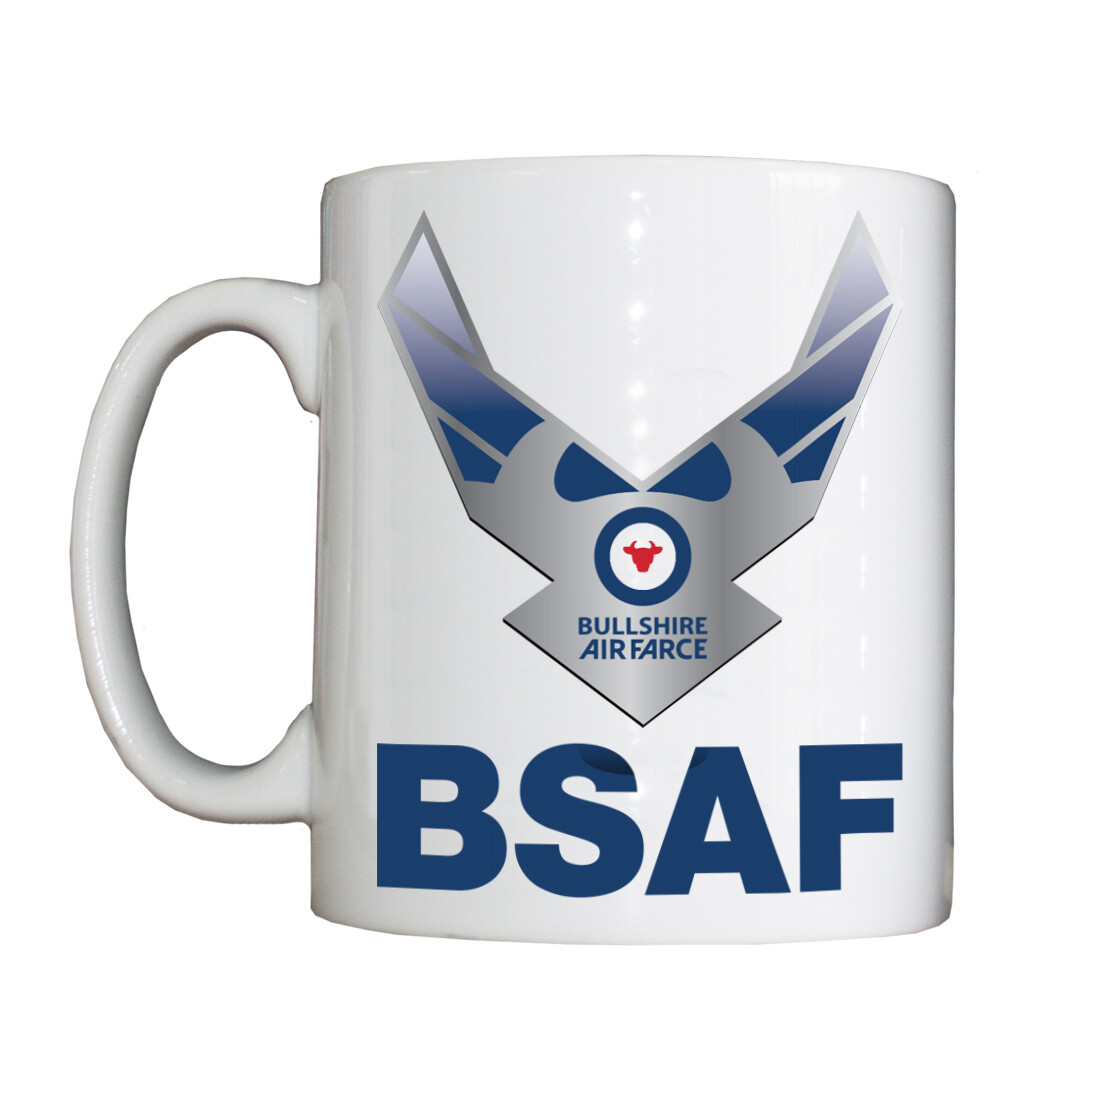 Personalised 'BSAF' Drinking Vessel